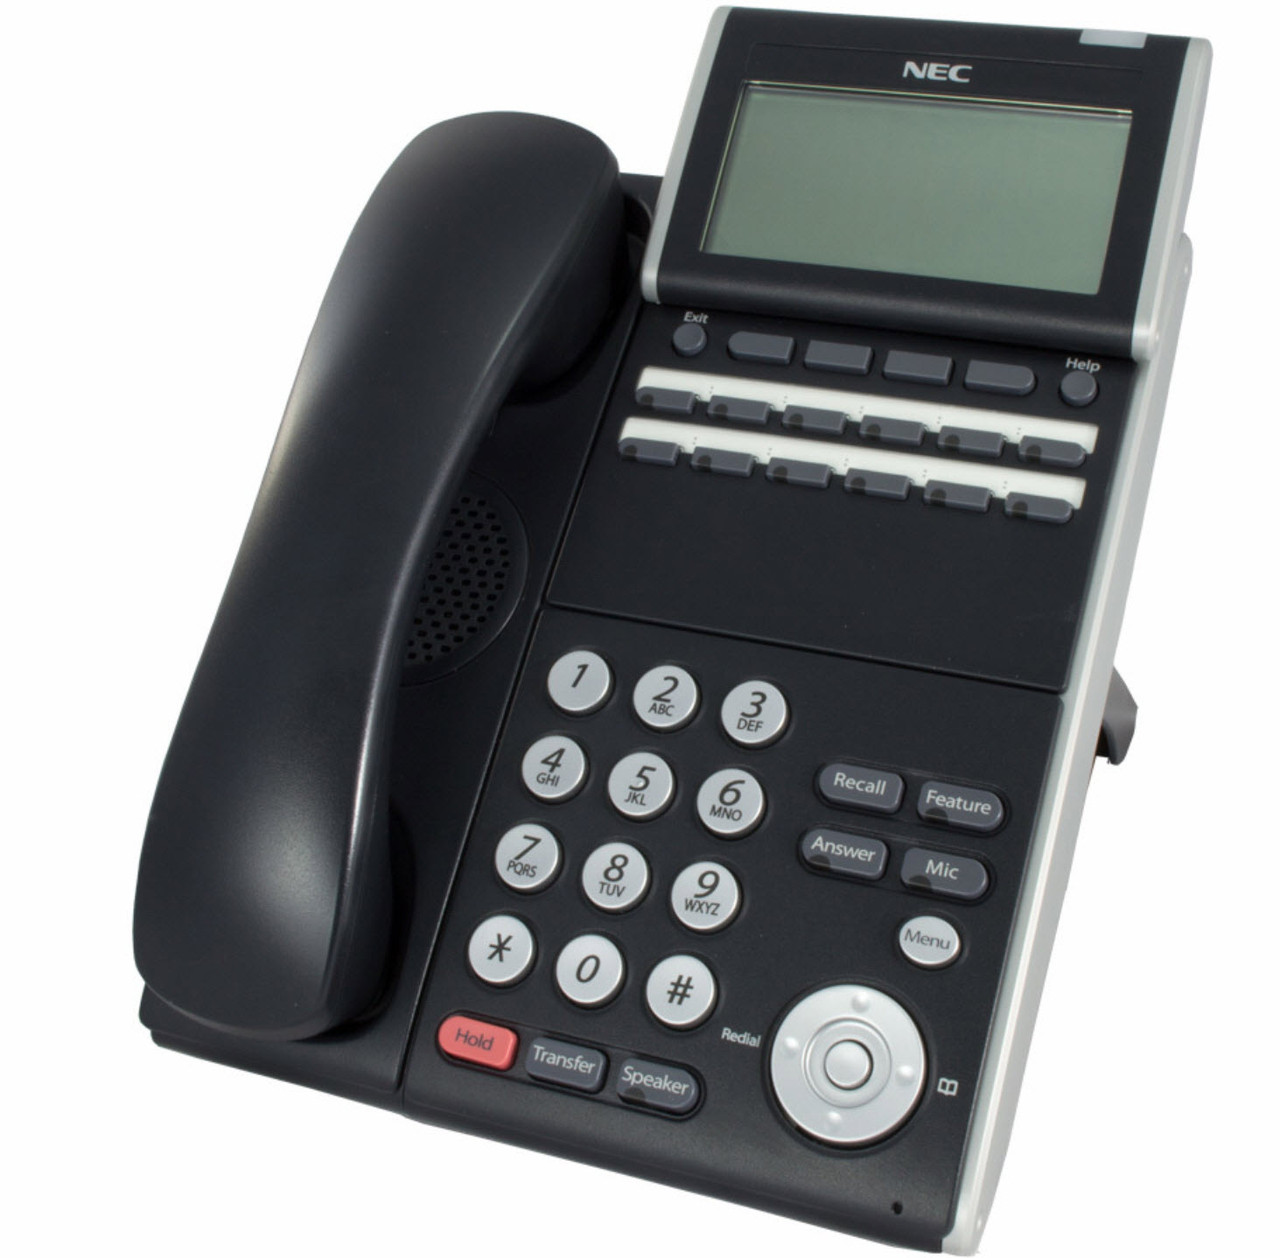 NEC Dtl-12d-1 Bk Tel Dt300 Series Office Phone for sale online 